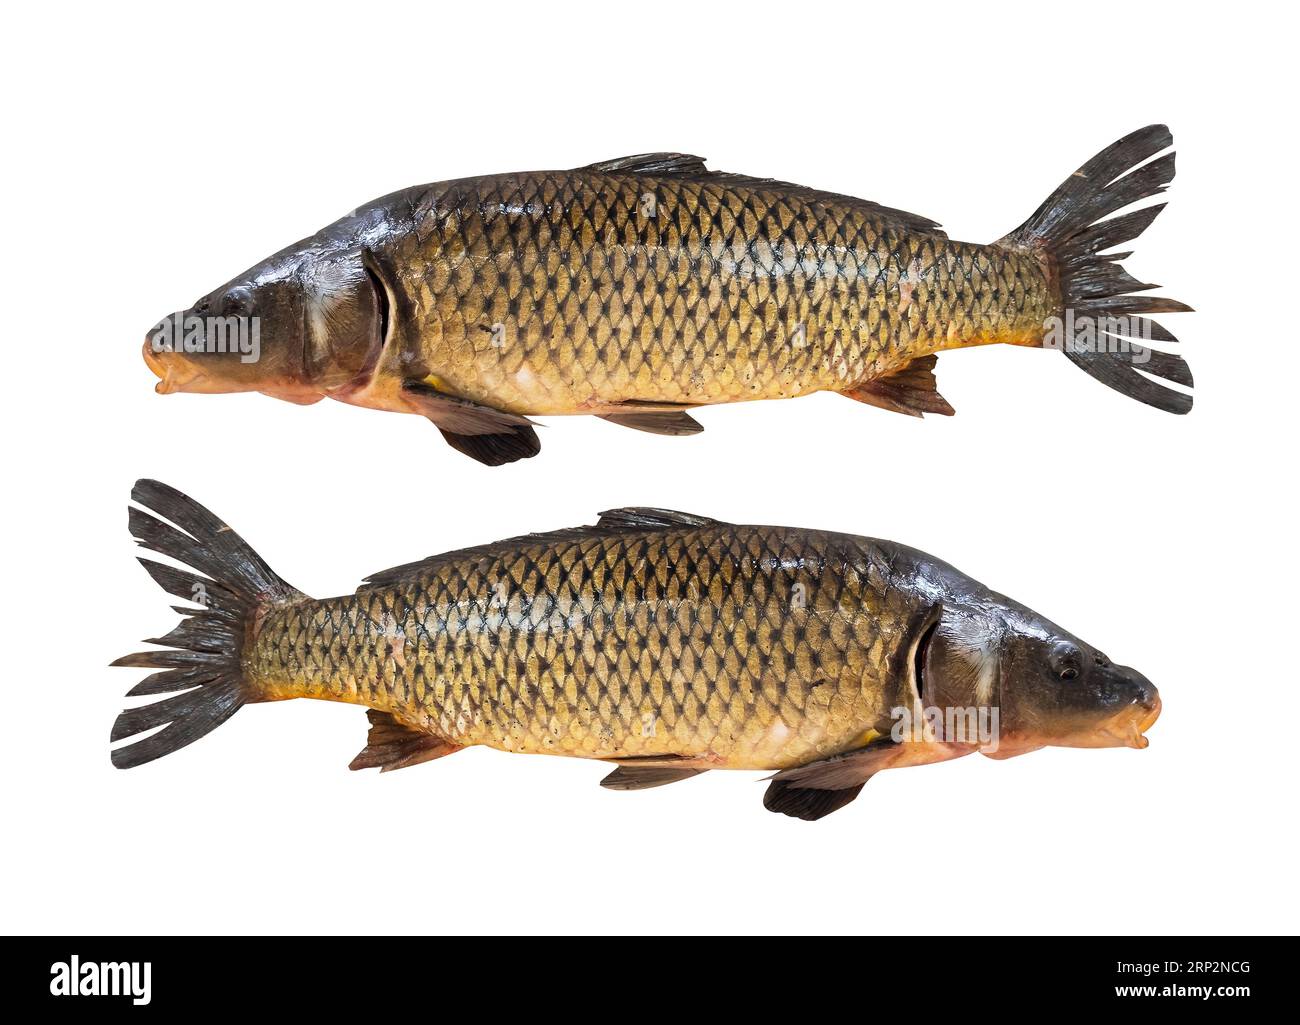 Carp fish. image of a carp on a white background. Stock Photo